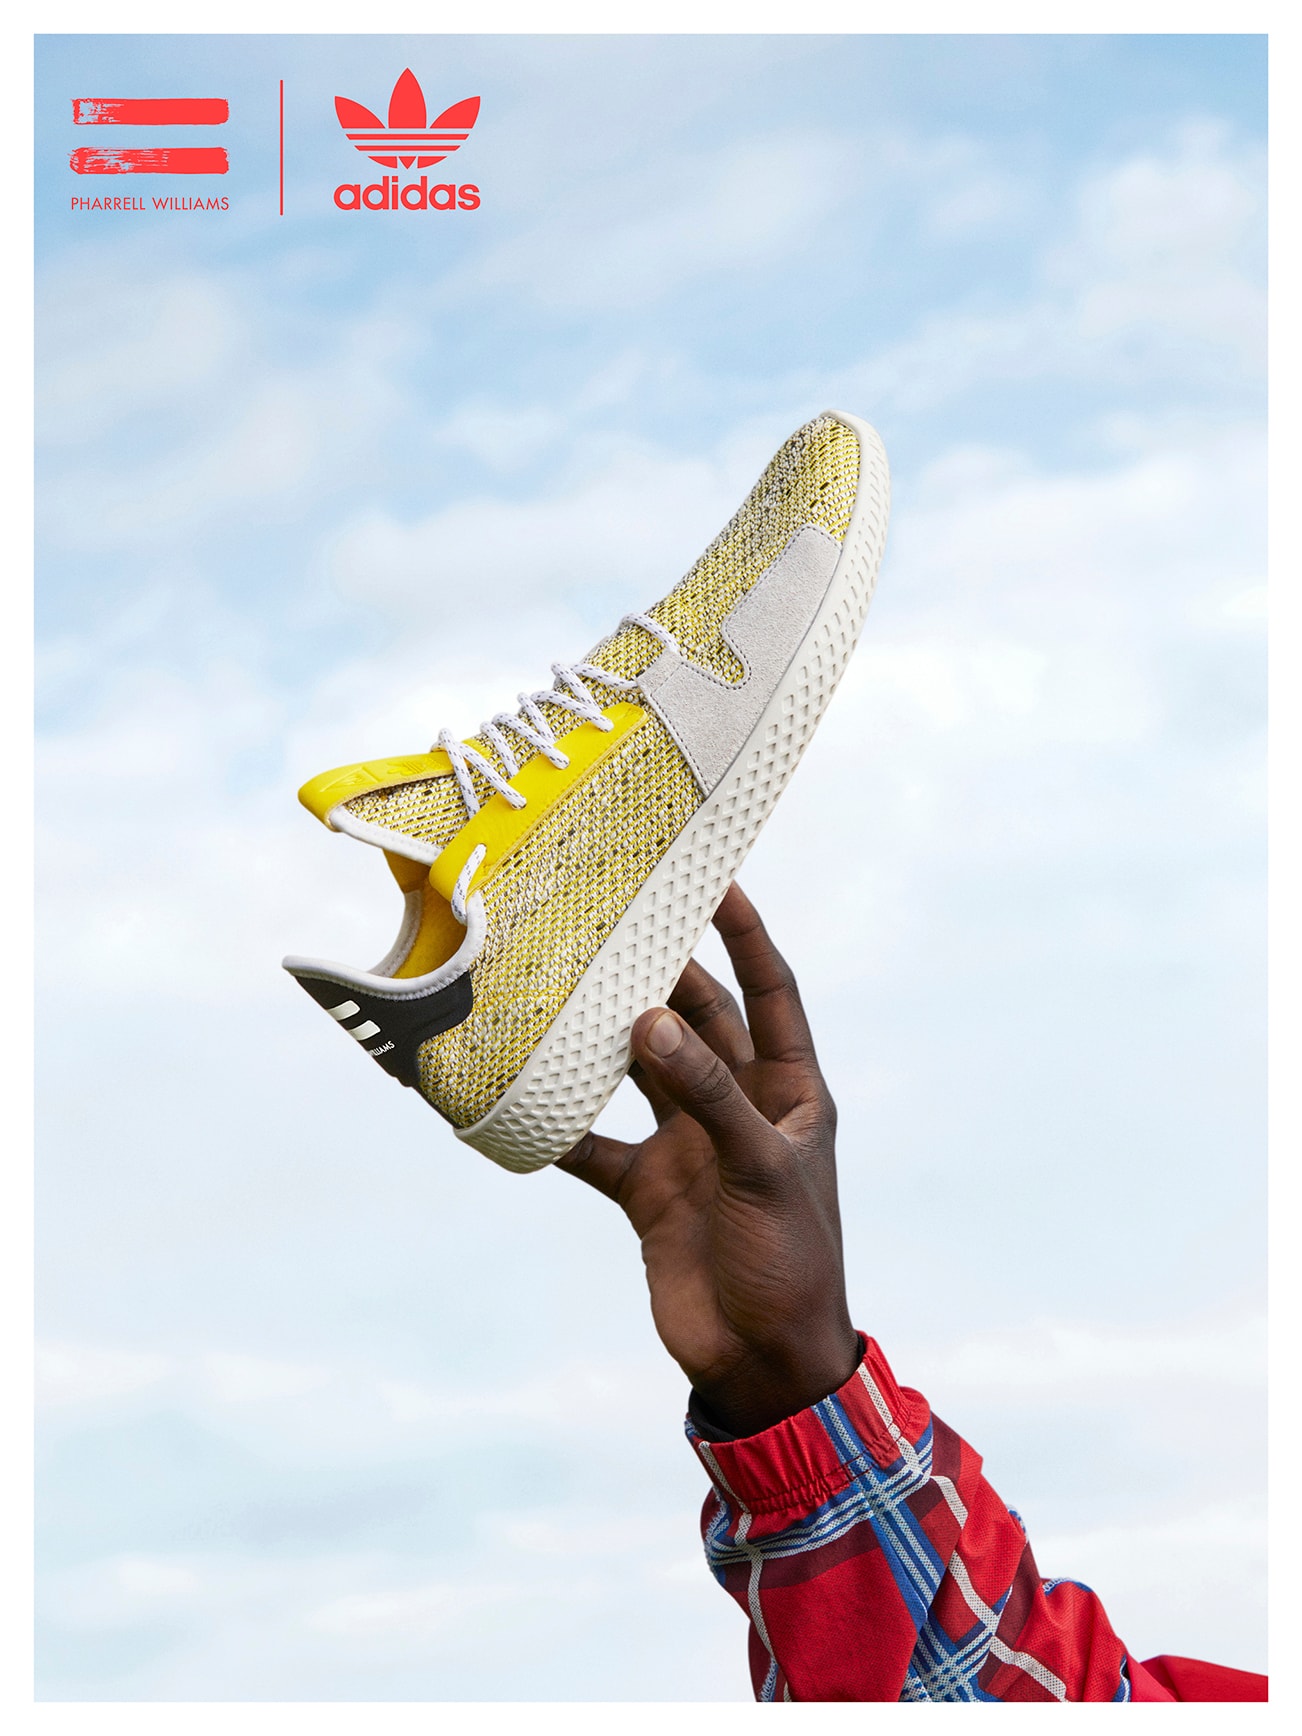 adidas Originals Pharrell Williams SOLARHU Lookbook Trainers Kicks Shoes Footwear Sneakers Cop Purchase Buy Available Soon Lookbooks Collections NMD Tennis Hu Apparel Jacket Release Date